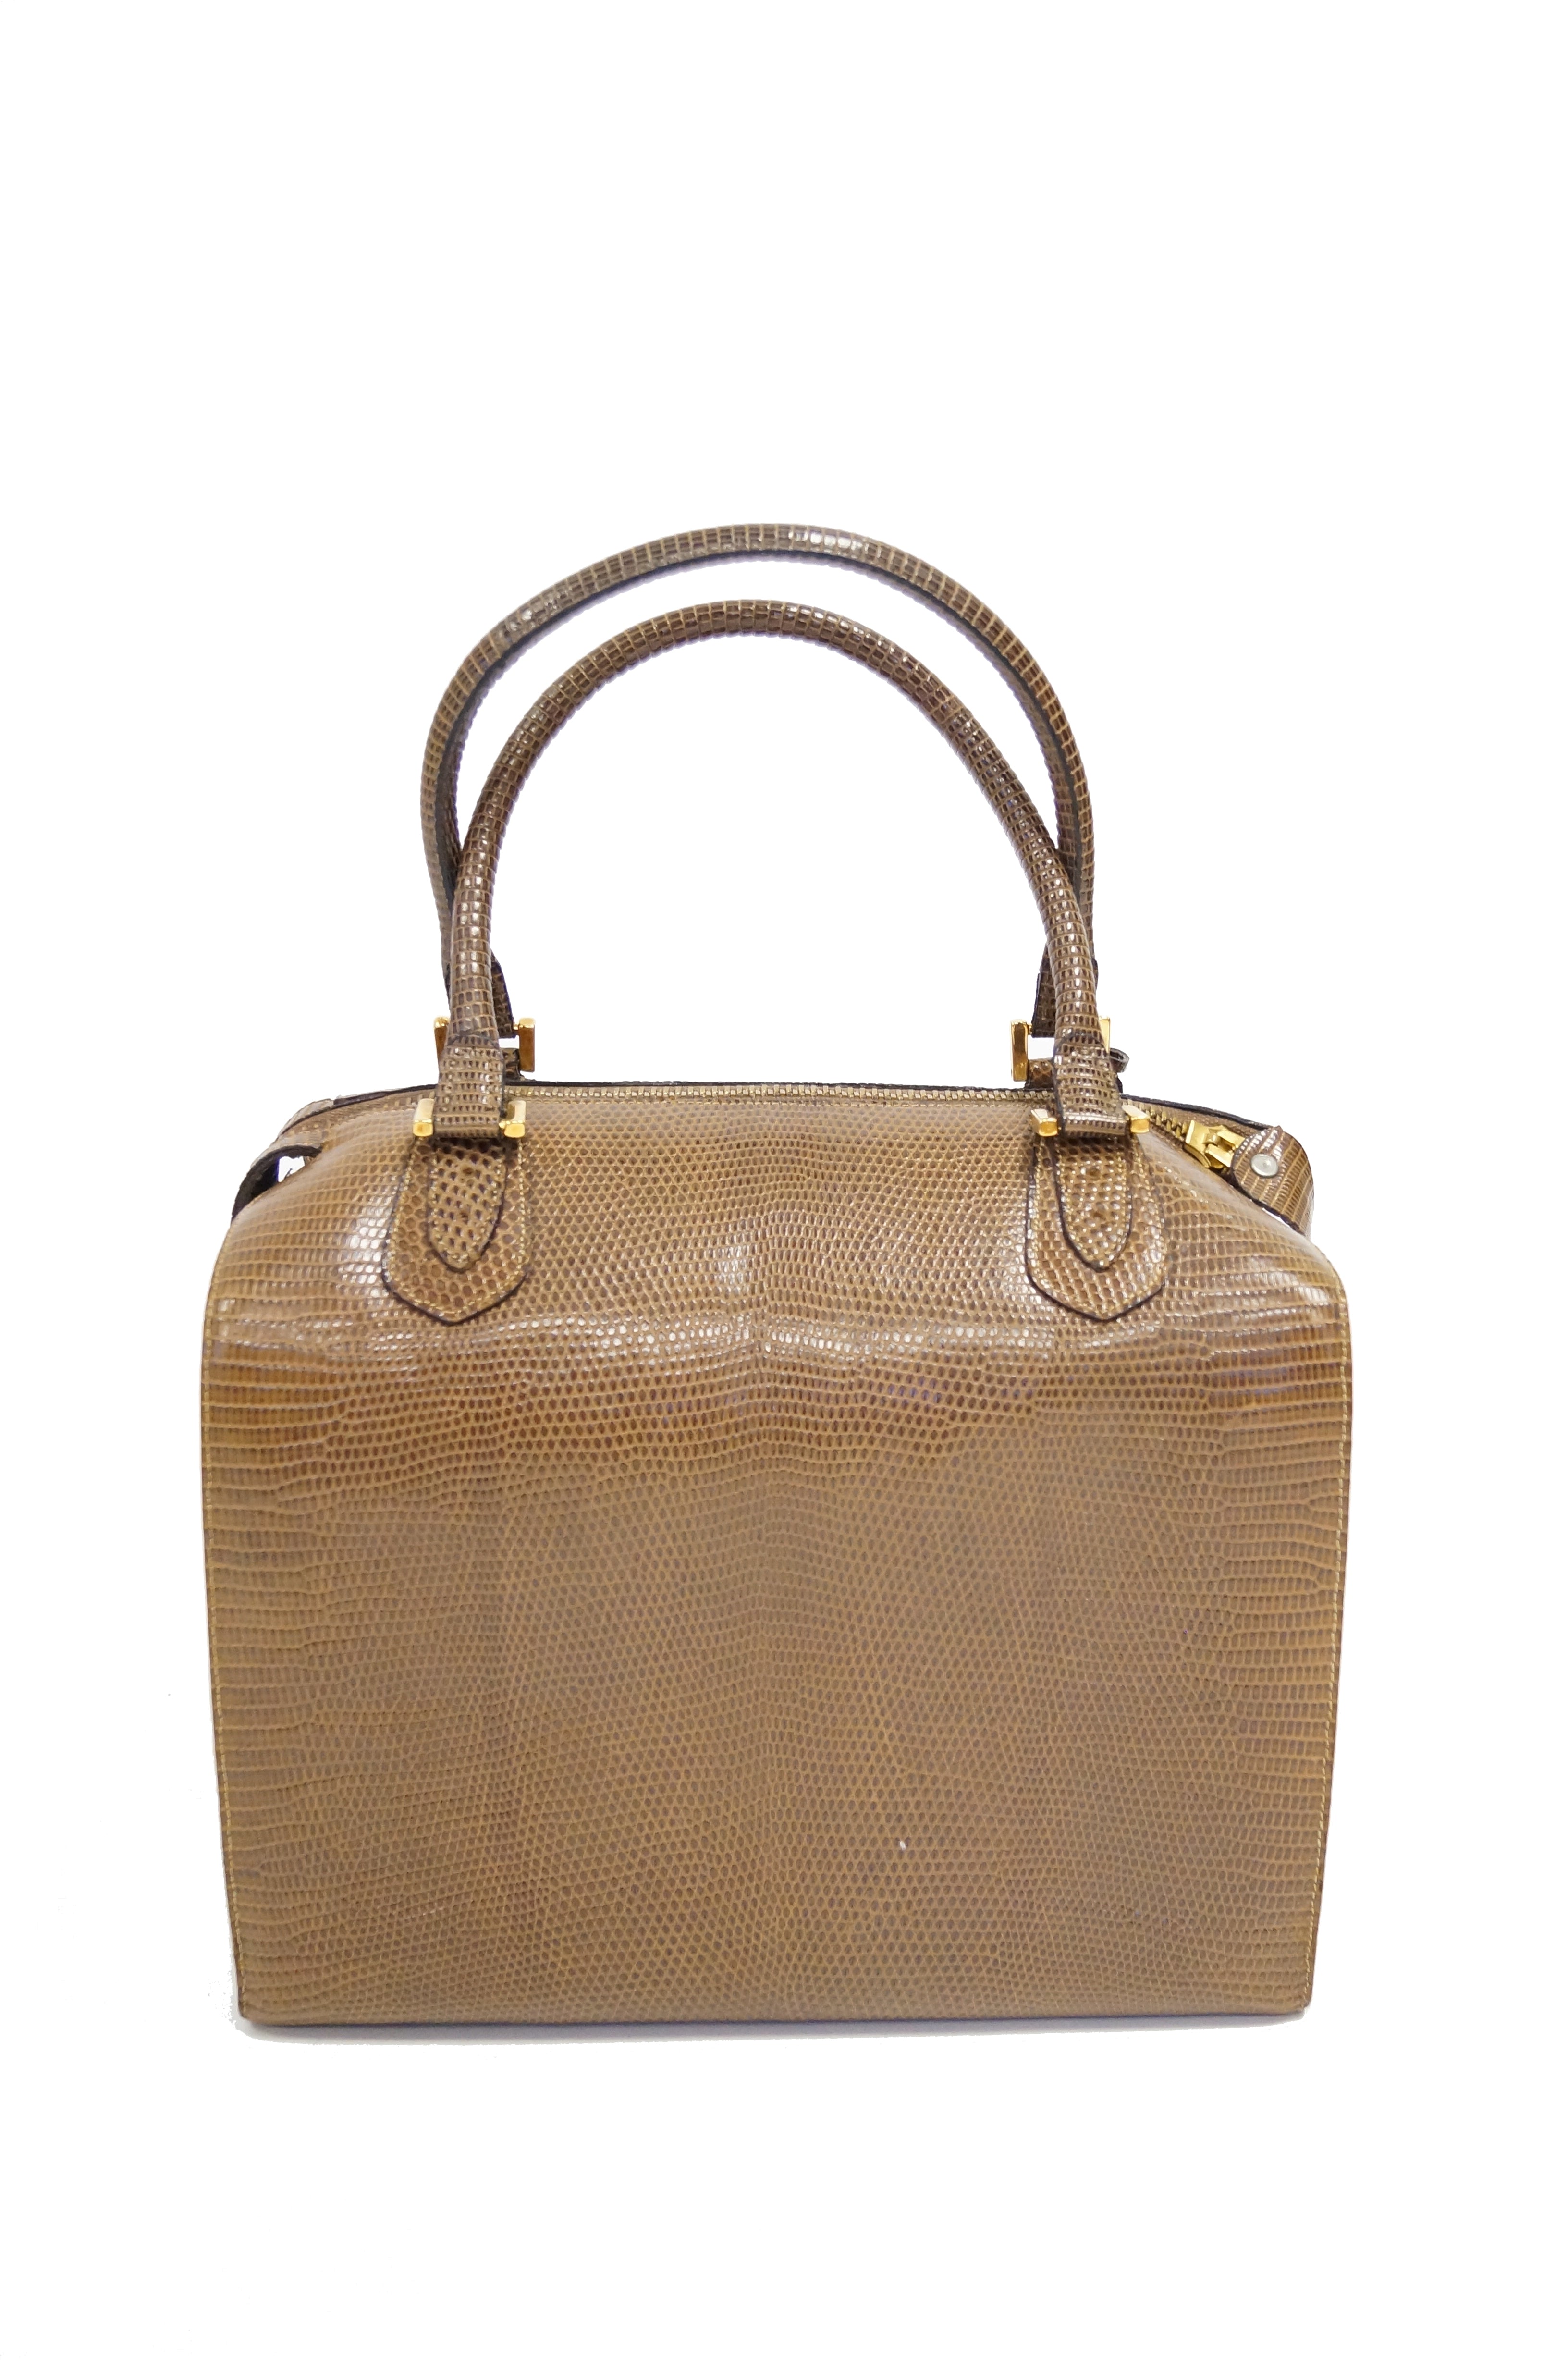 Rare vintage 1960s Lederer lizard skin watch box handbag purse